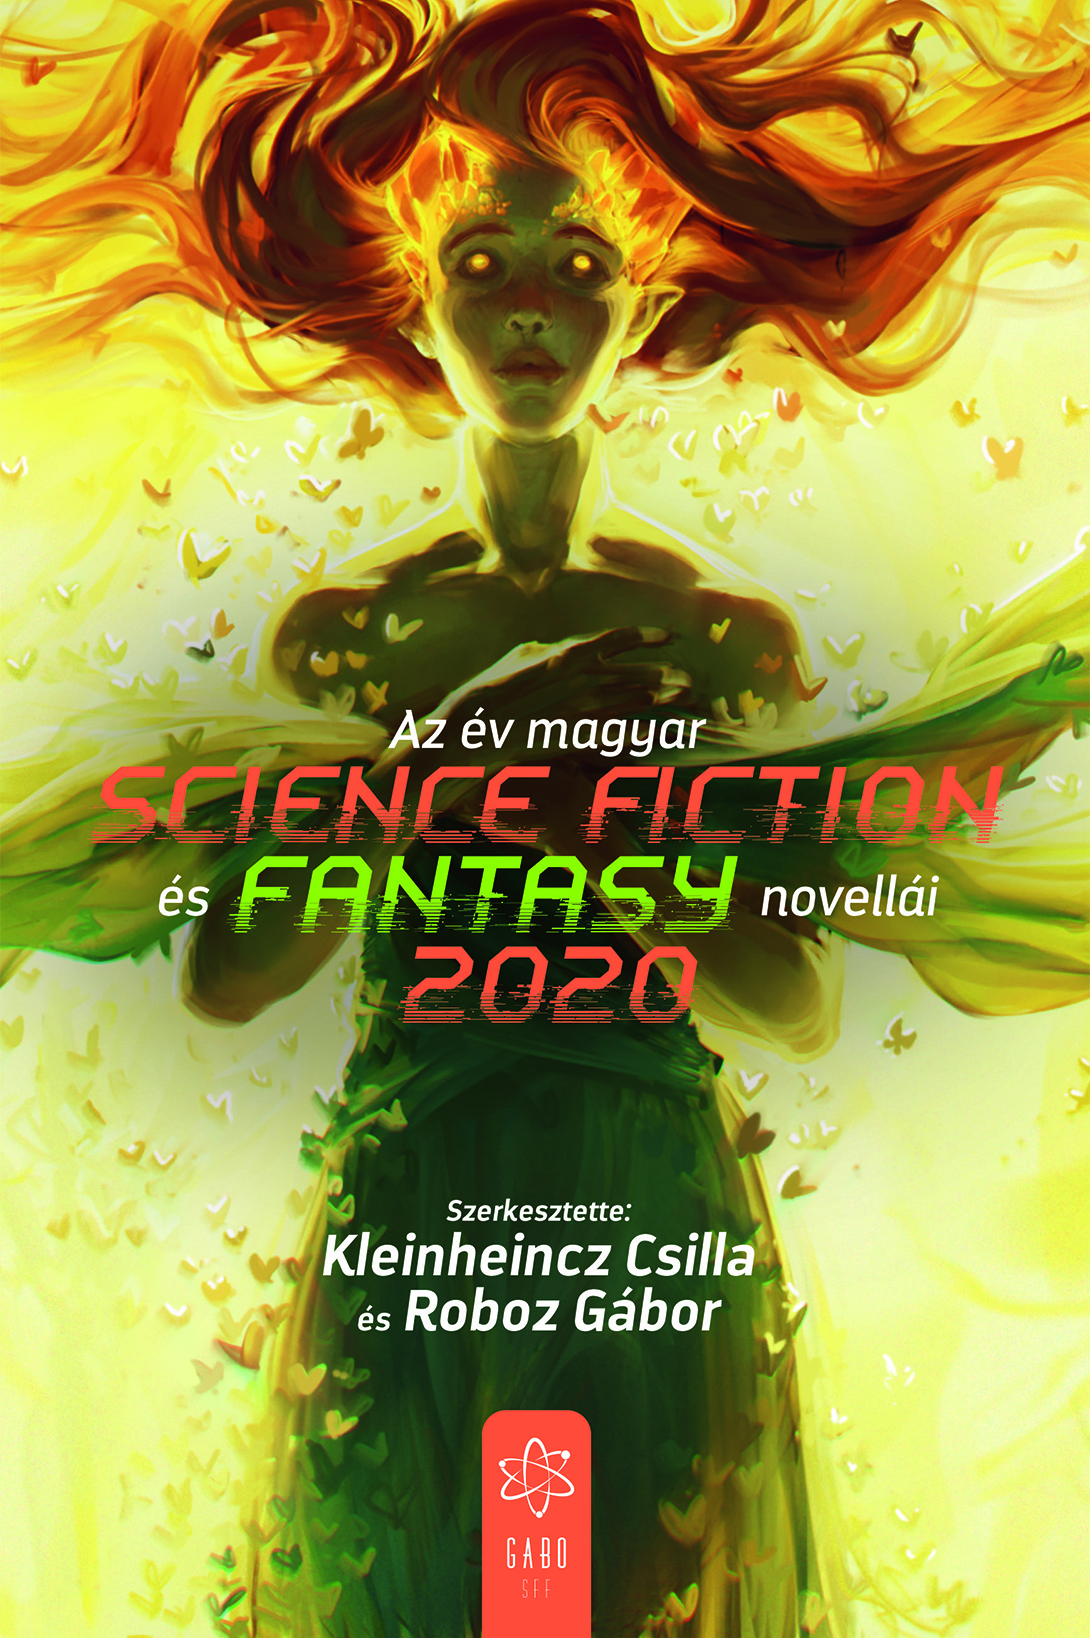 js_az_ev_magyar_sci-fi_es_fantasy_novellai2020_media_javitott.jpg